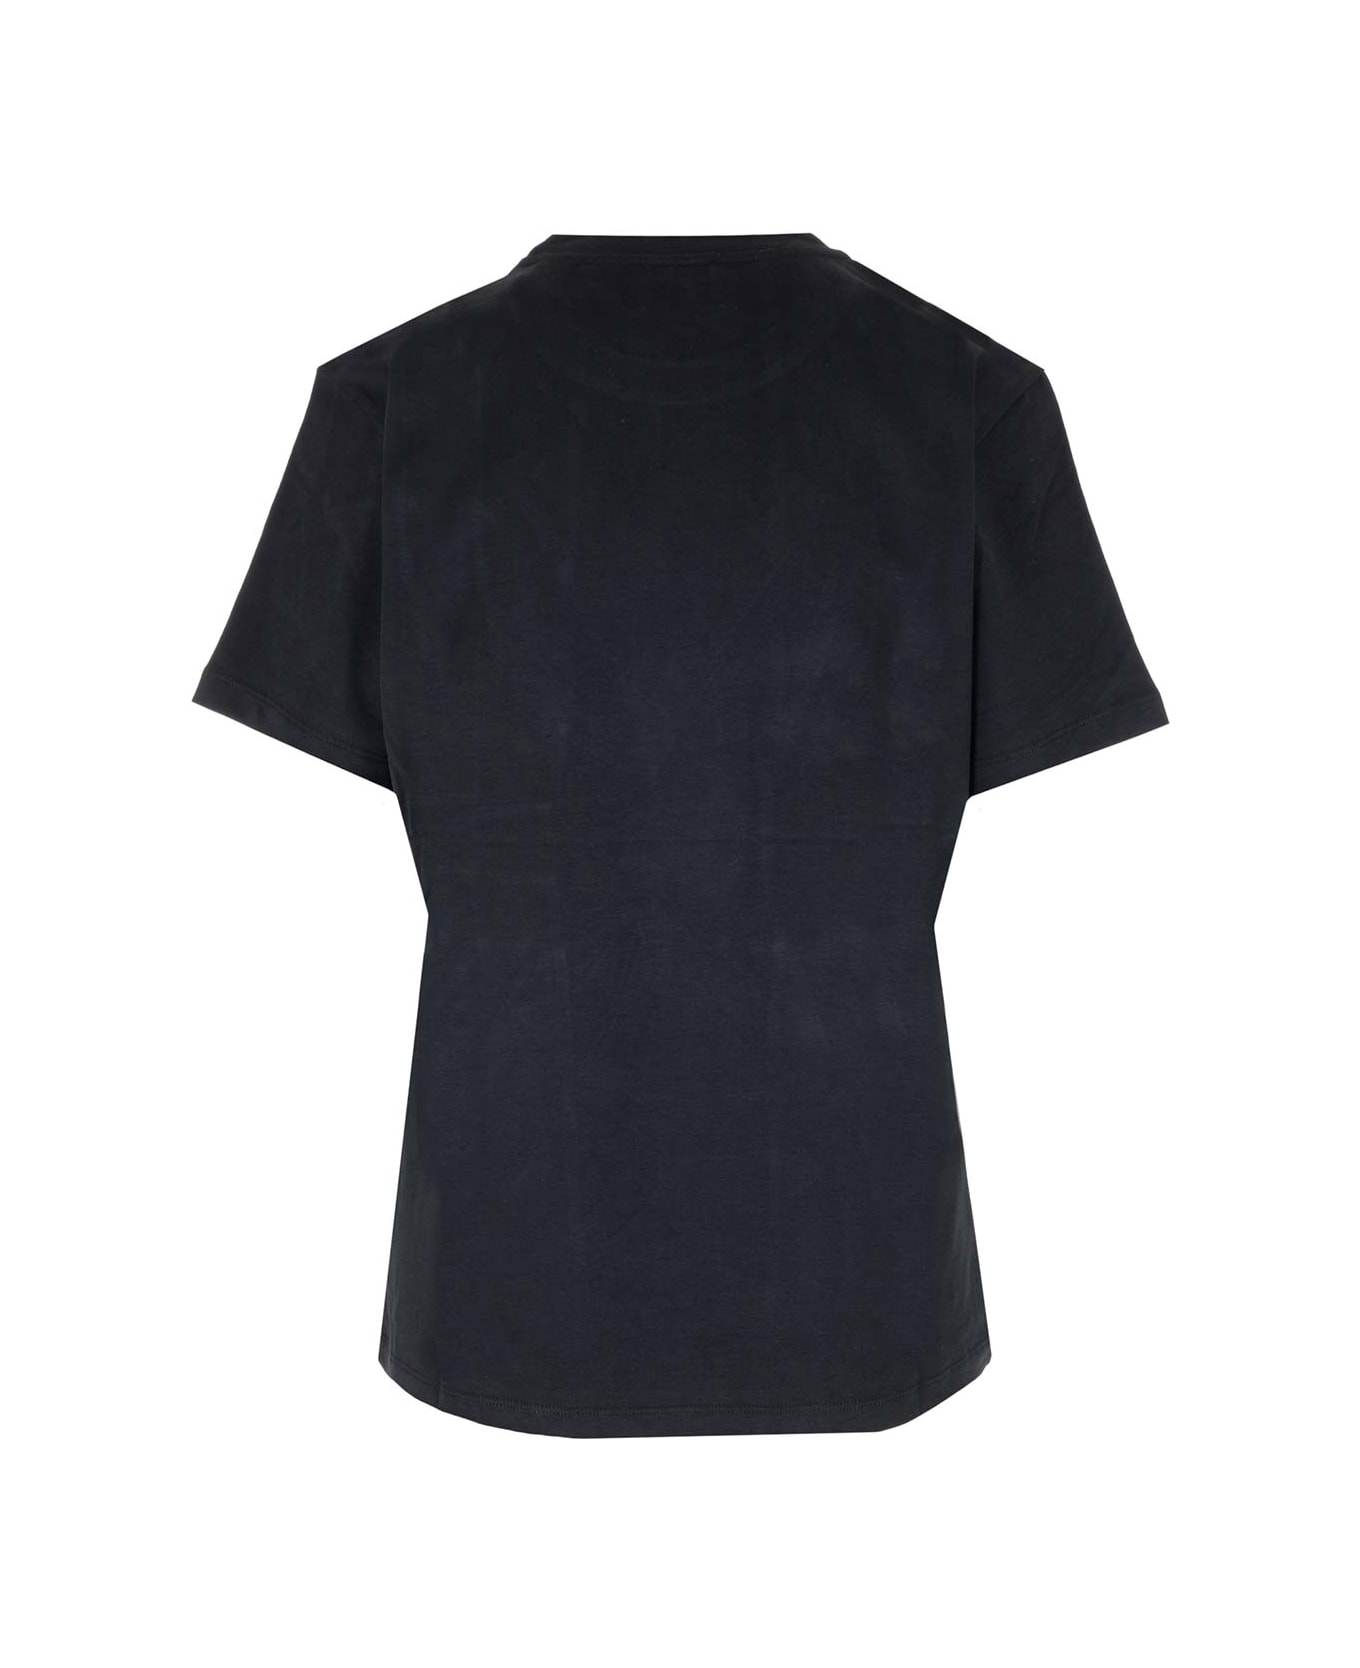 Marant Étoile 'zewel' T-shirt - Black